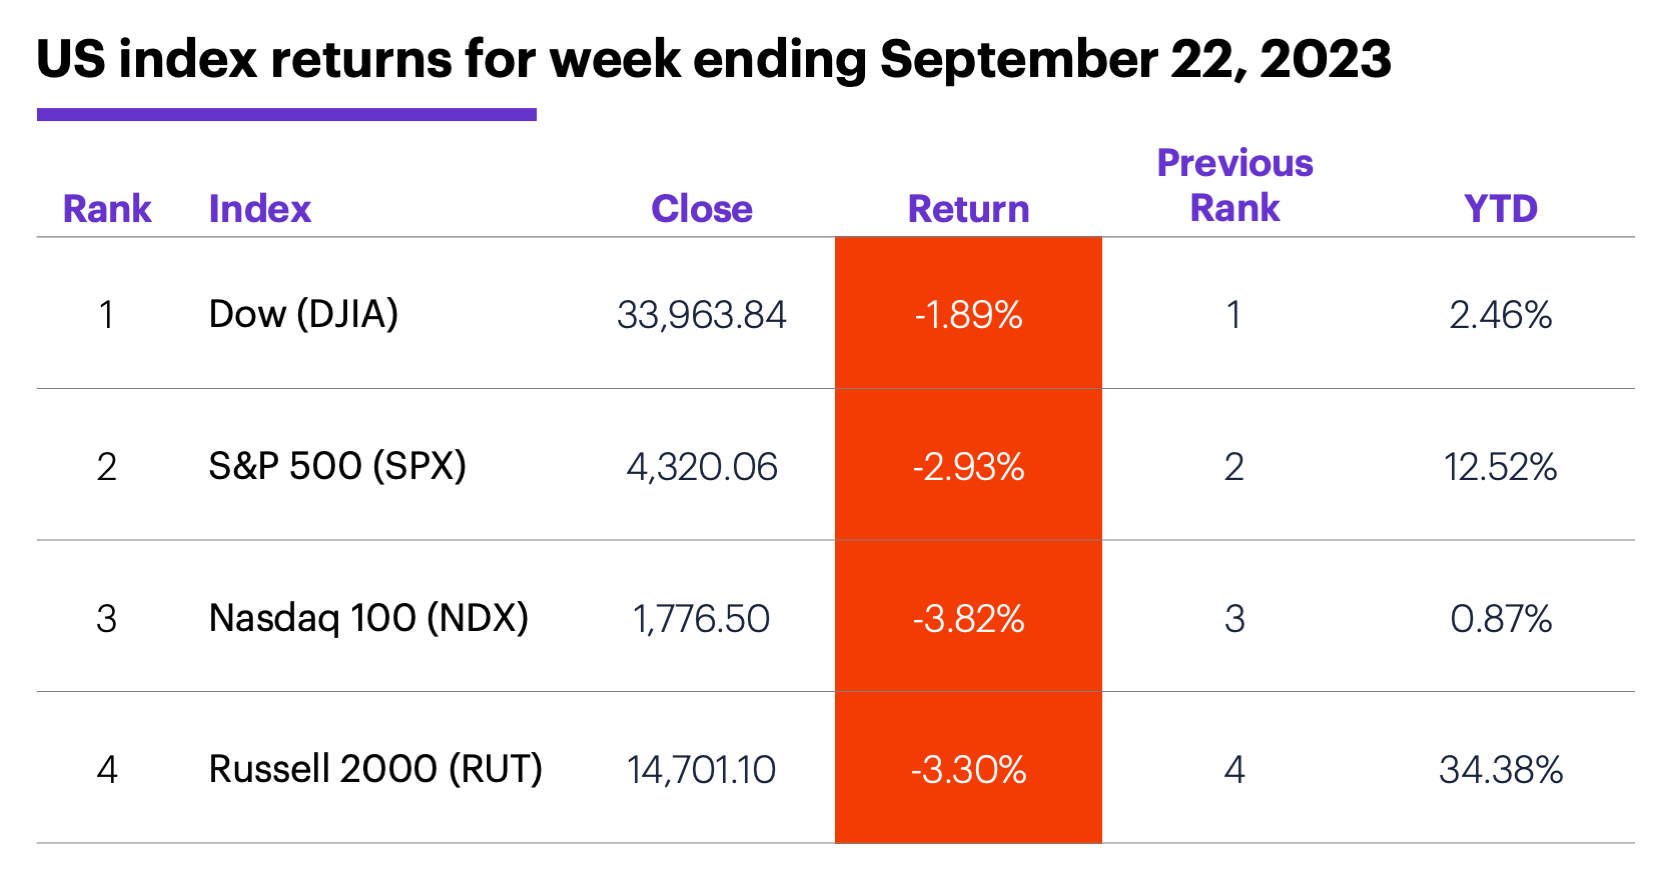 US stock index performance for week ending 9/22/23. S&P 500 (SPX), Nasdaq 100 (NDX), Russell 2000 (RUT), Dow Jones Industrial Average (DJIA).